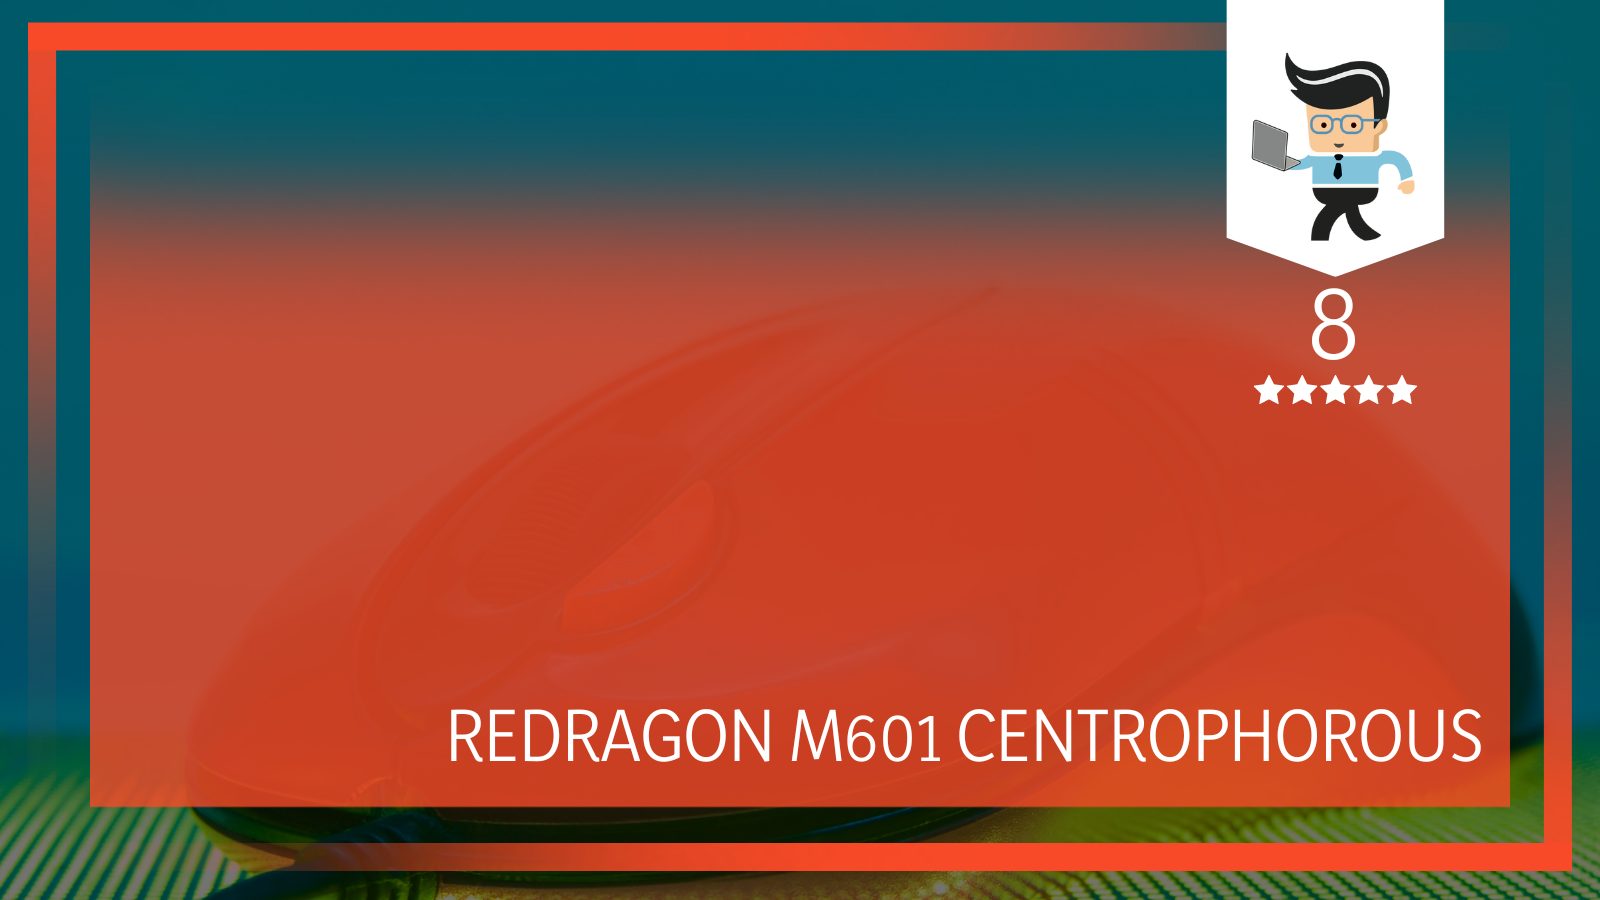 ReDragon M601 Centrophorous Mouse Review